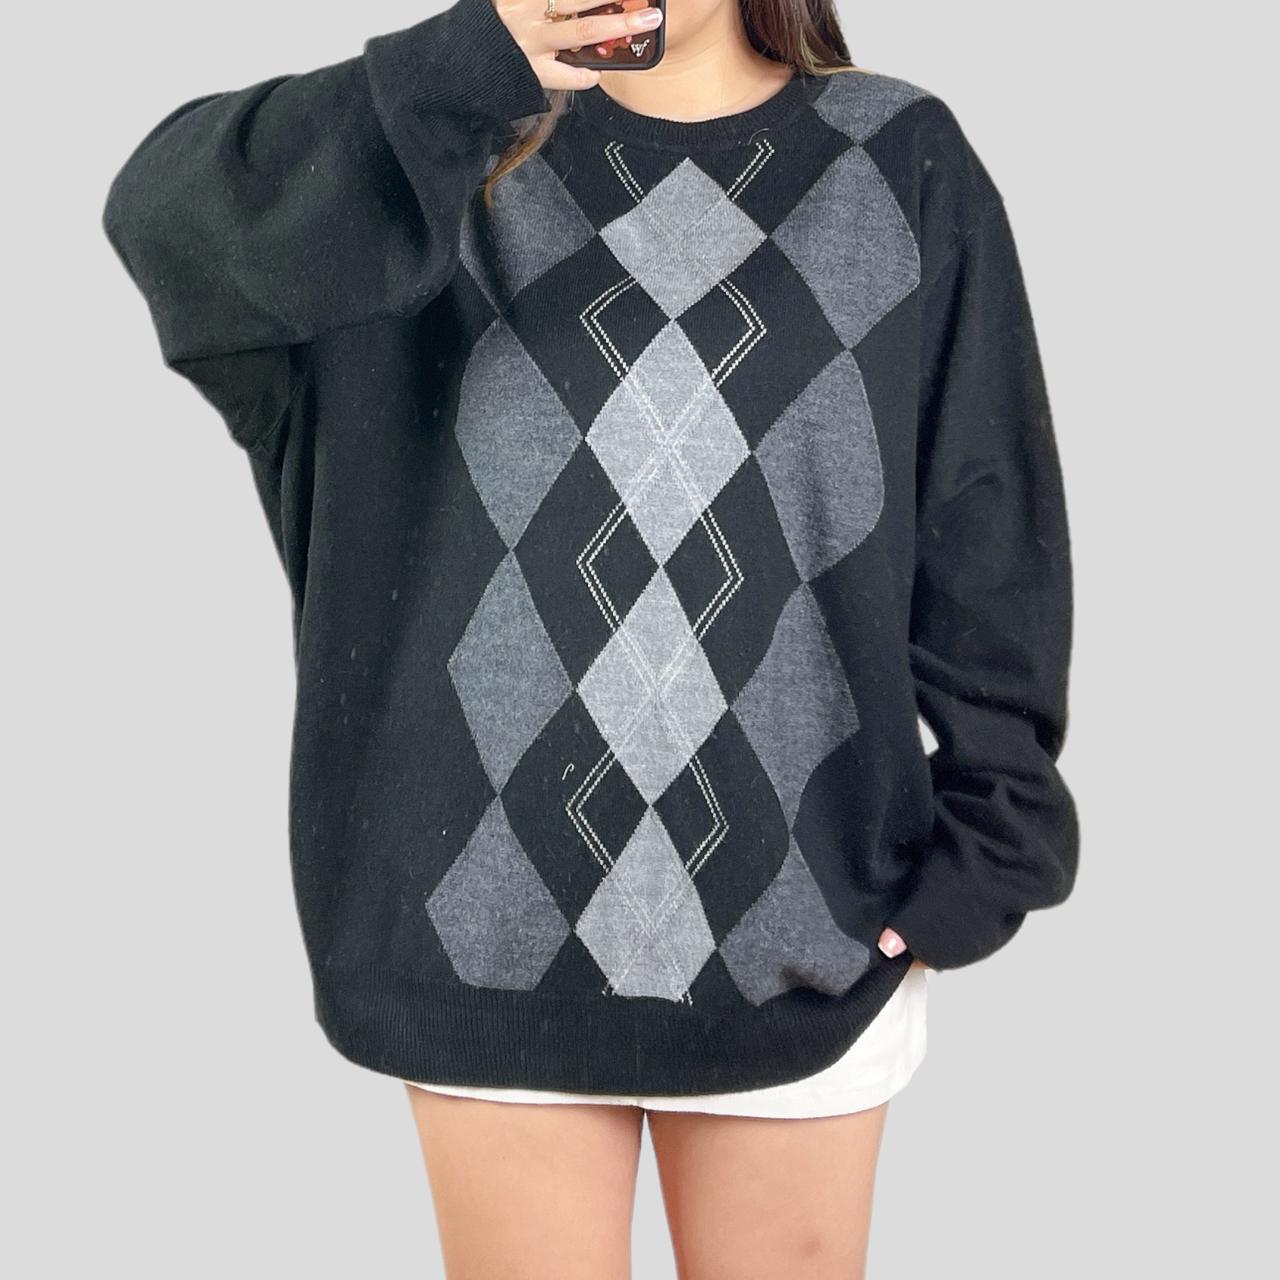 Product Image 1 - preppy argyle oversized sweater

Brand: dockers
Size